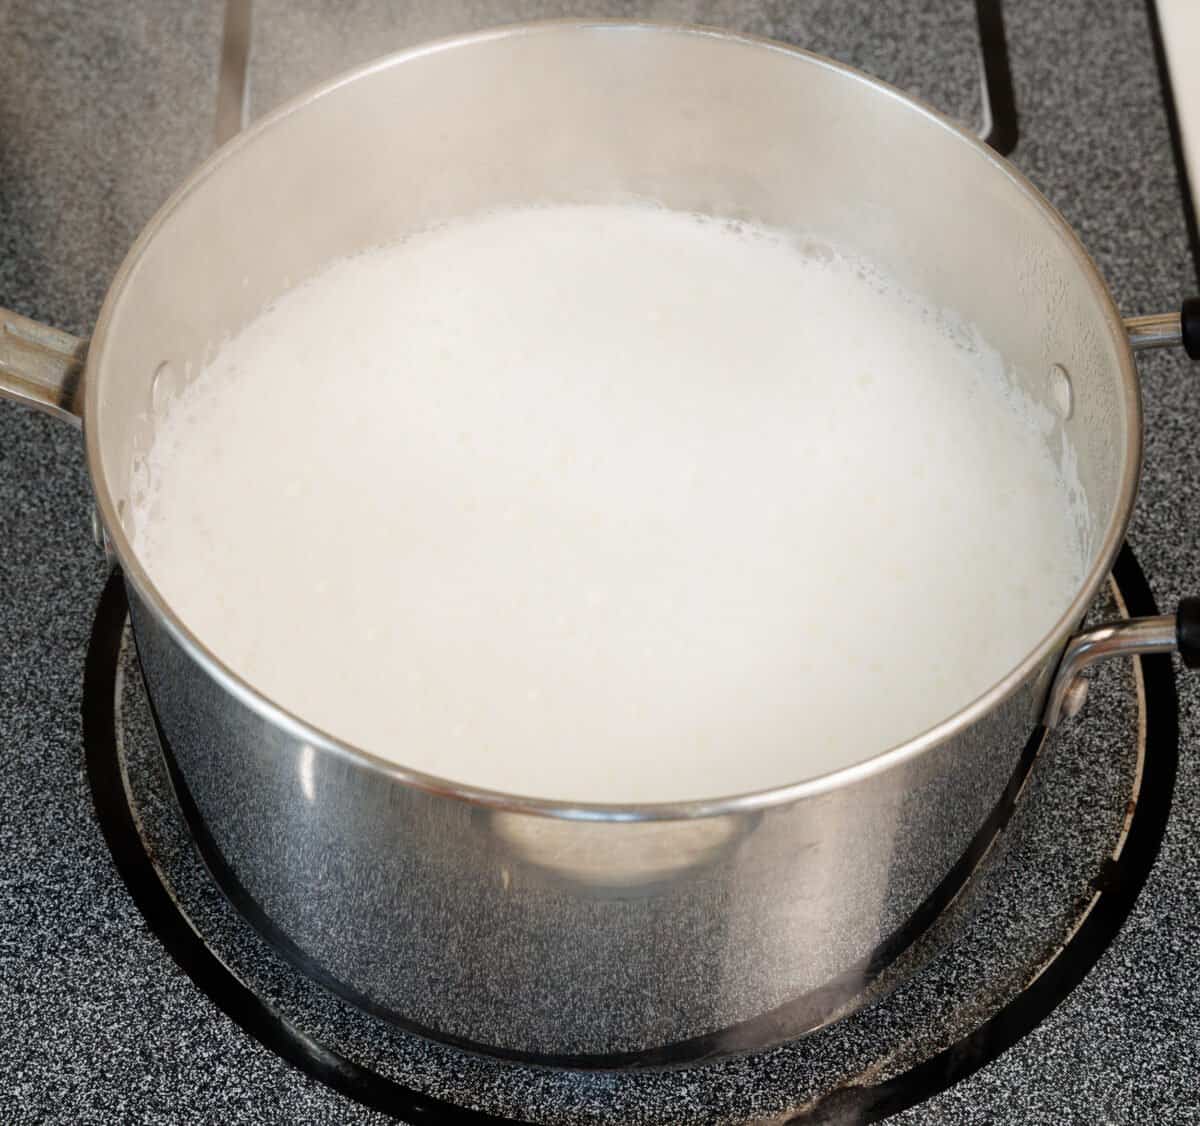 heating milk in a medium-sized saucepan.